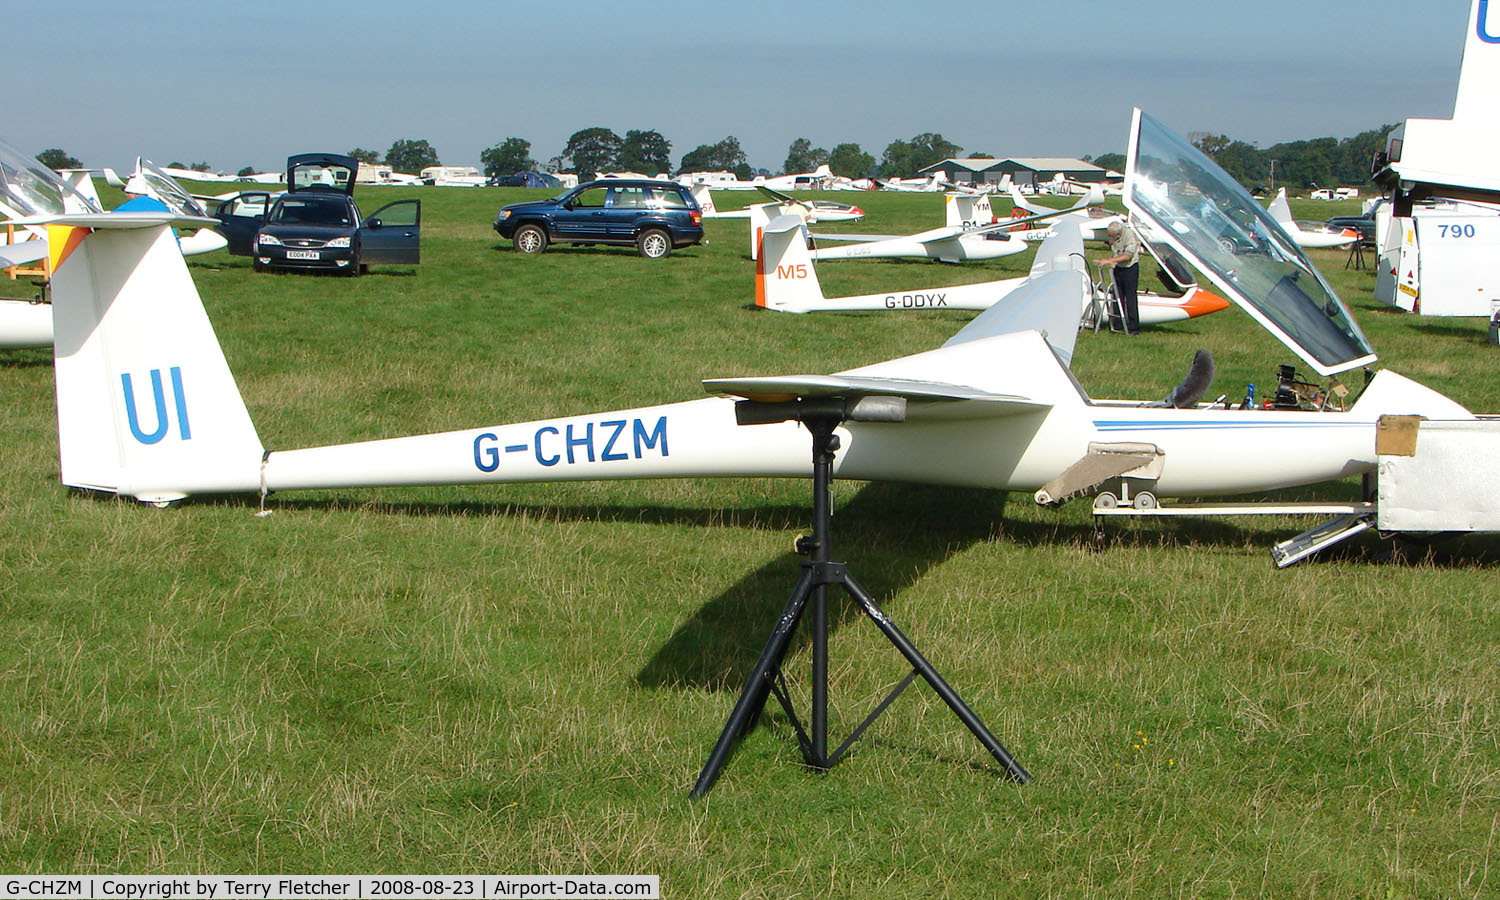 G-CHZM, 1989 Rolladen-Schneider LS-4a C/N 4762, Competitor in the Midland Regional Gliding Championship at Husband's Bosworth